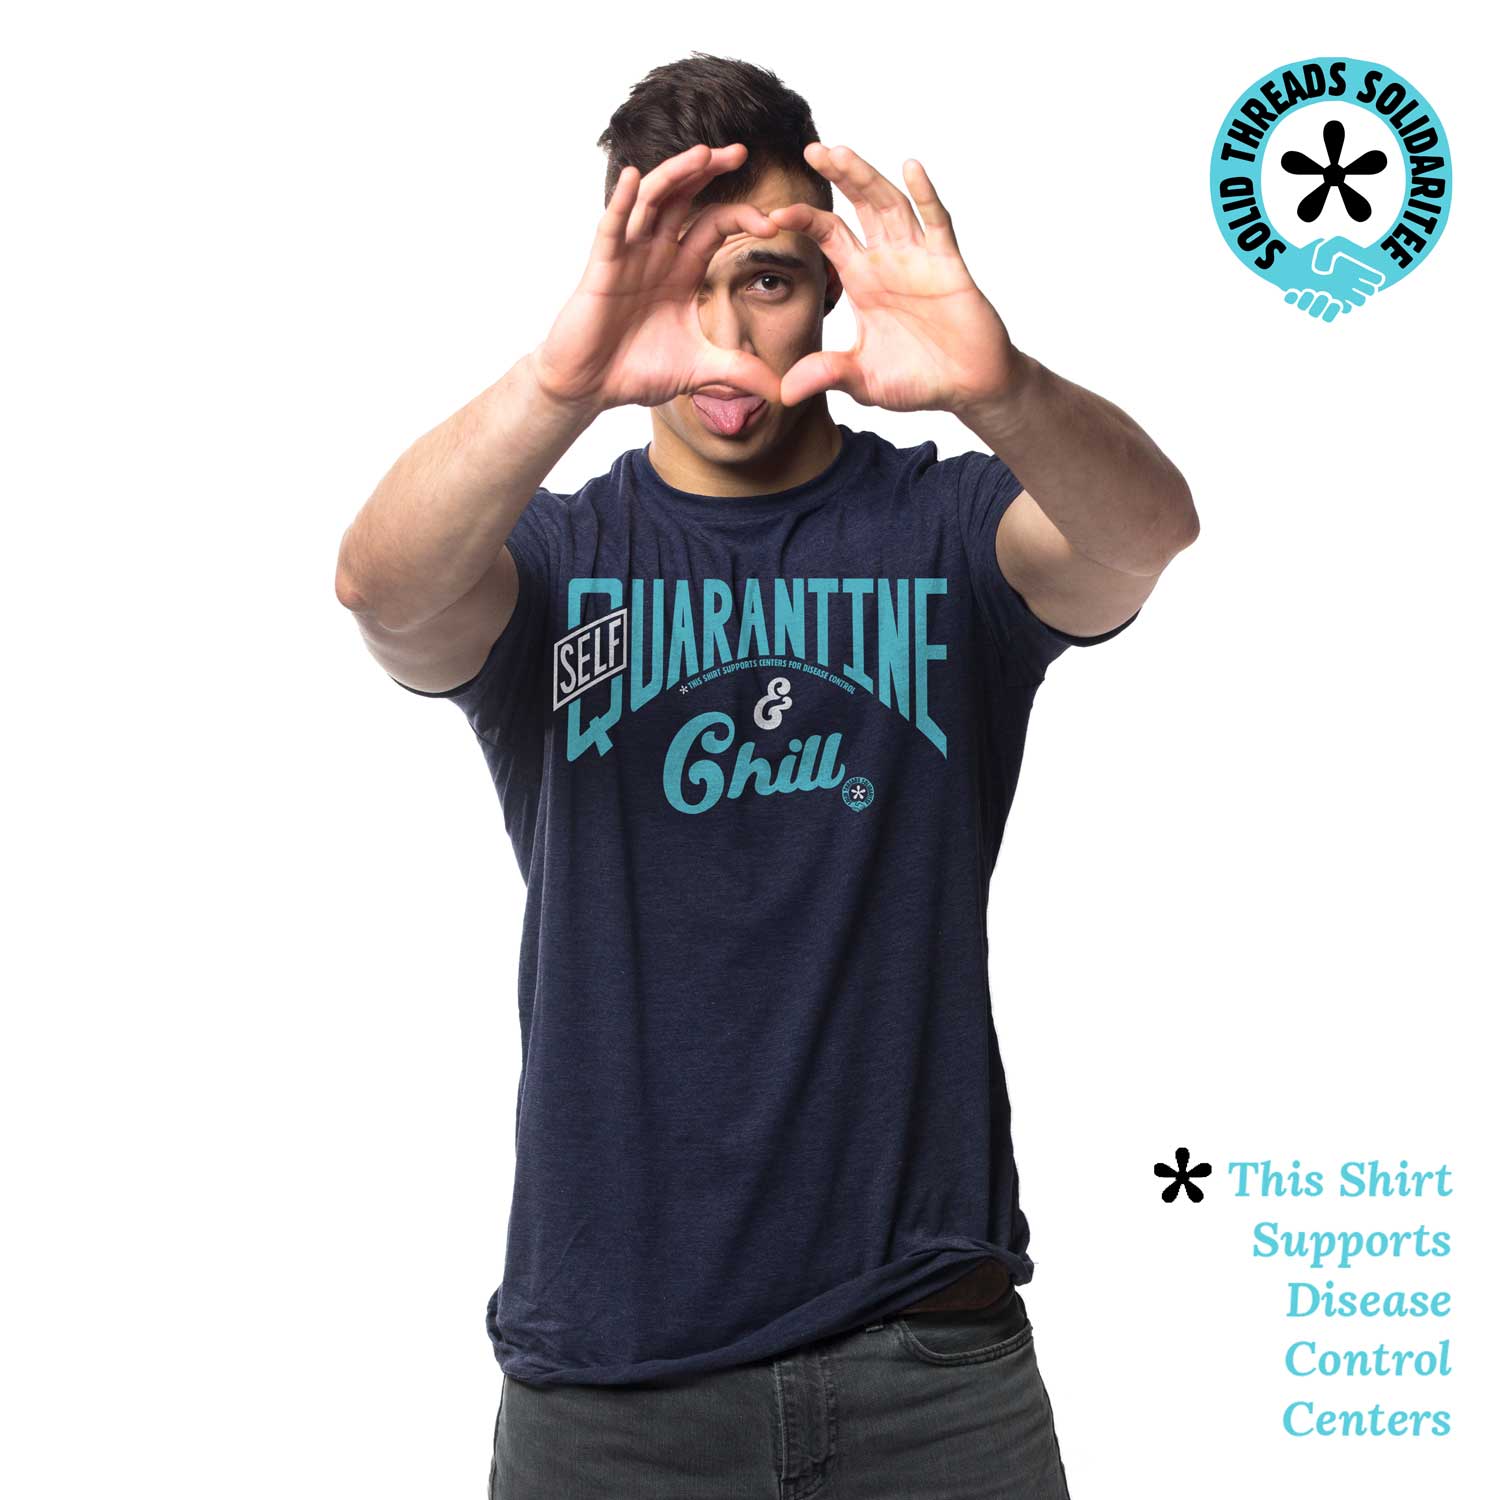 Men's Self Quarantine Chill Vintage Graphic T-shirt | Coronavirus Relief Charity Tee | Solid Threads